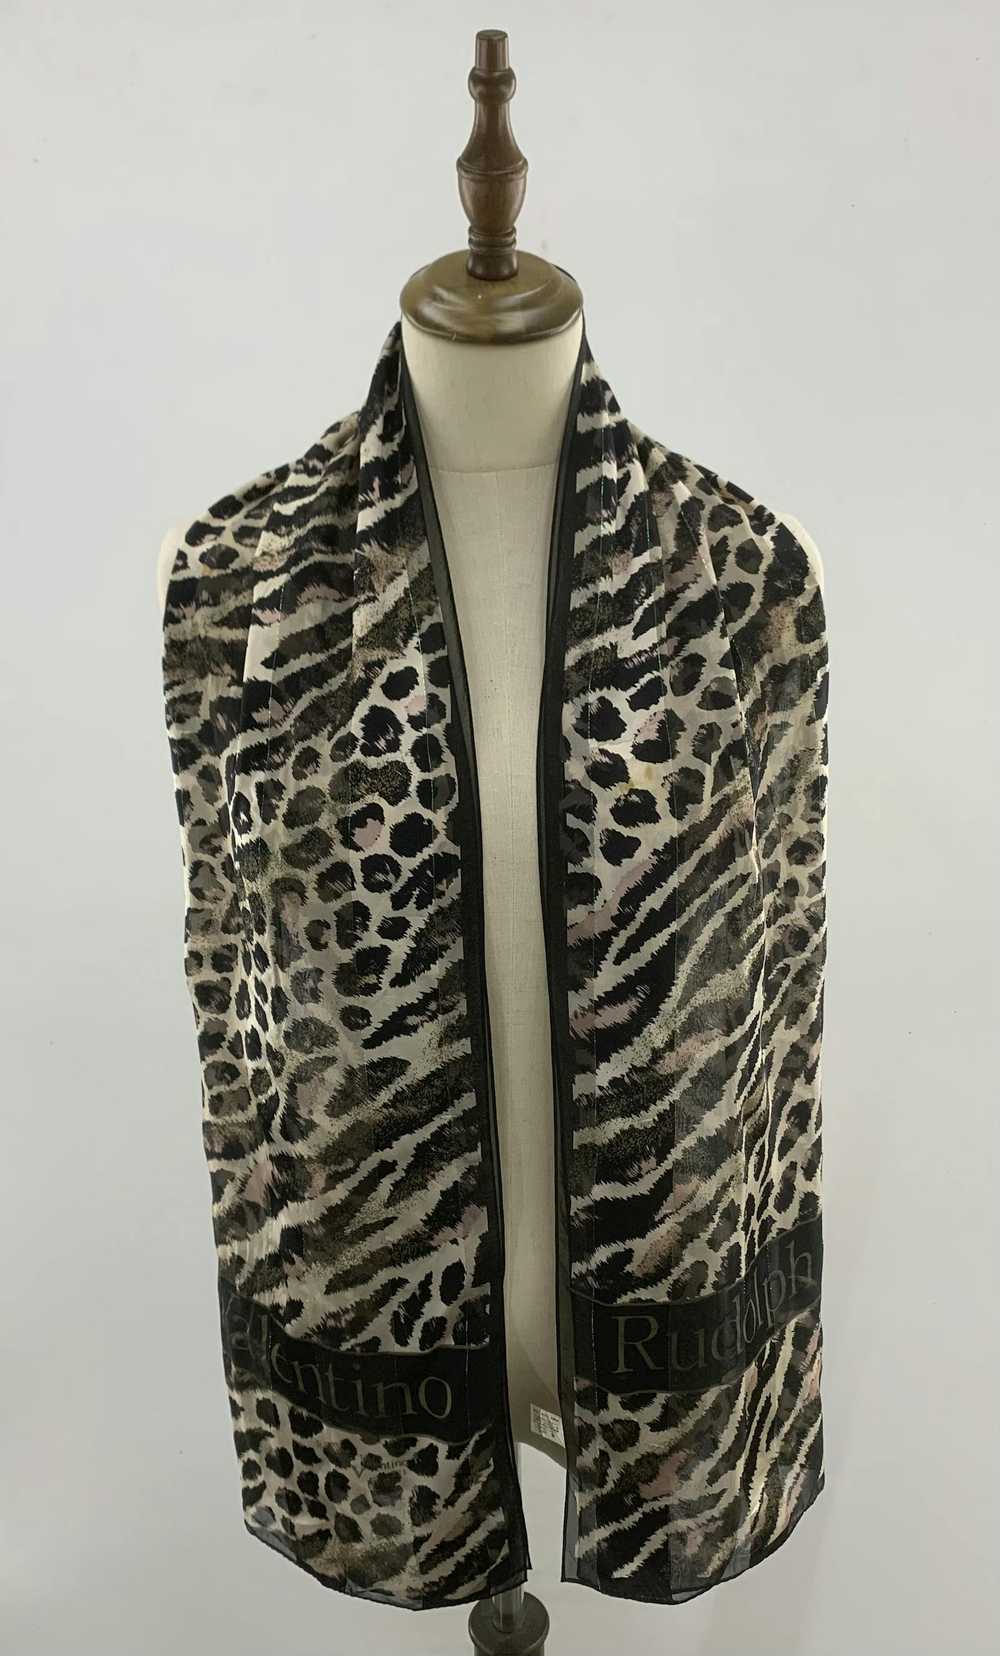 Vintage Rudolph Valentino Silk Scarf Leopard Print - image 1